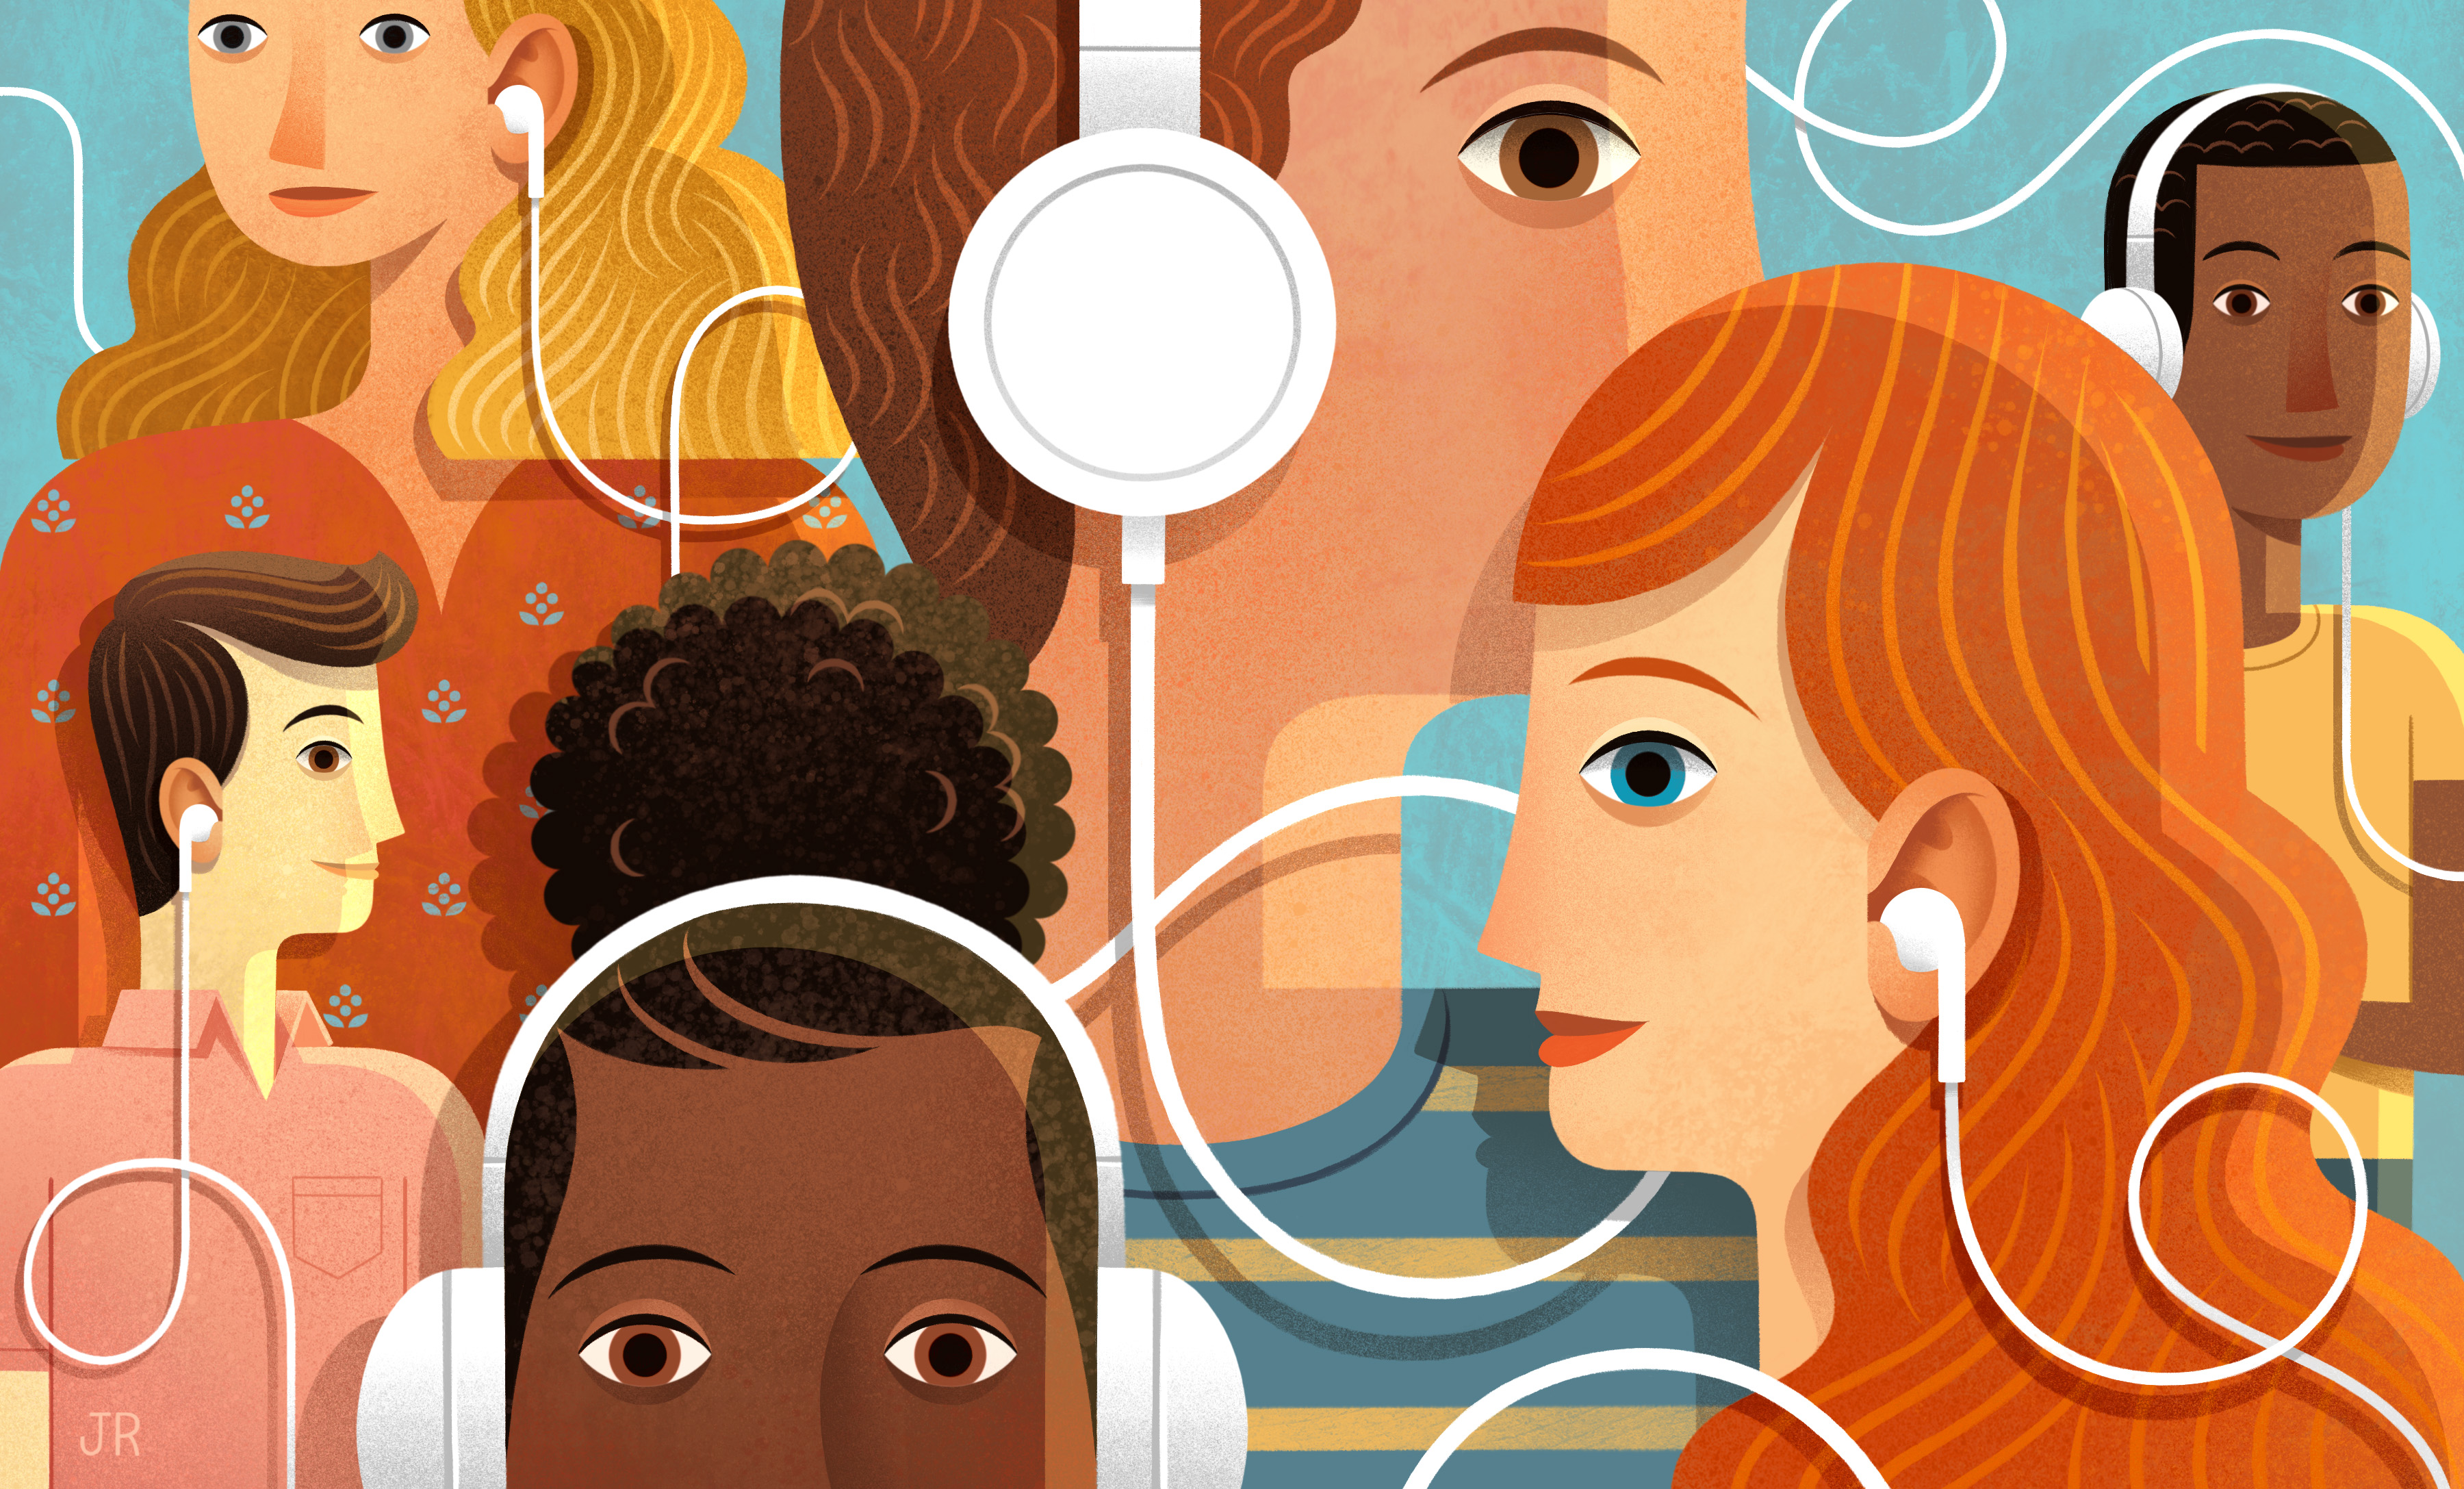 People with headphones on illustration by Jon Reinfurt.